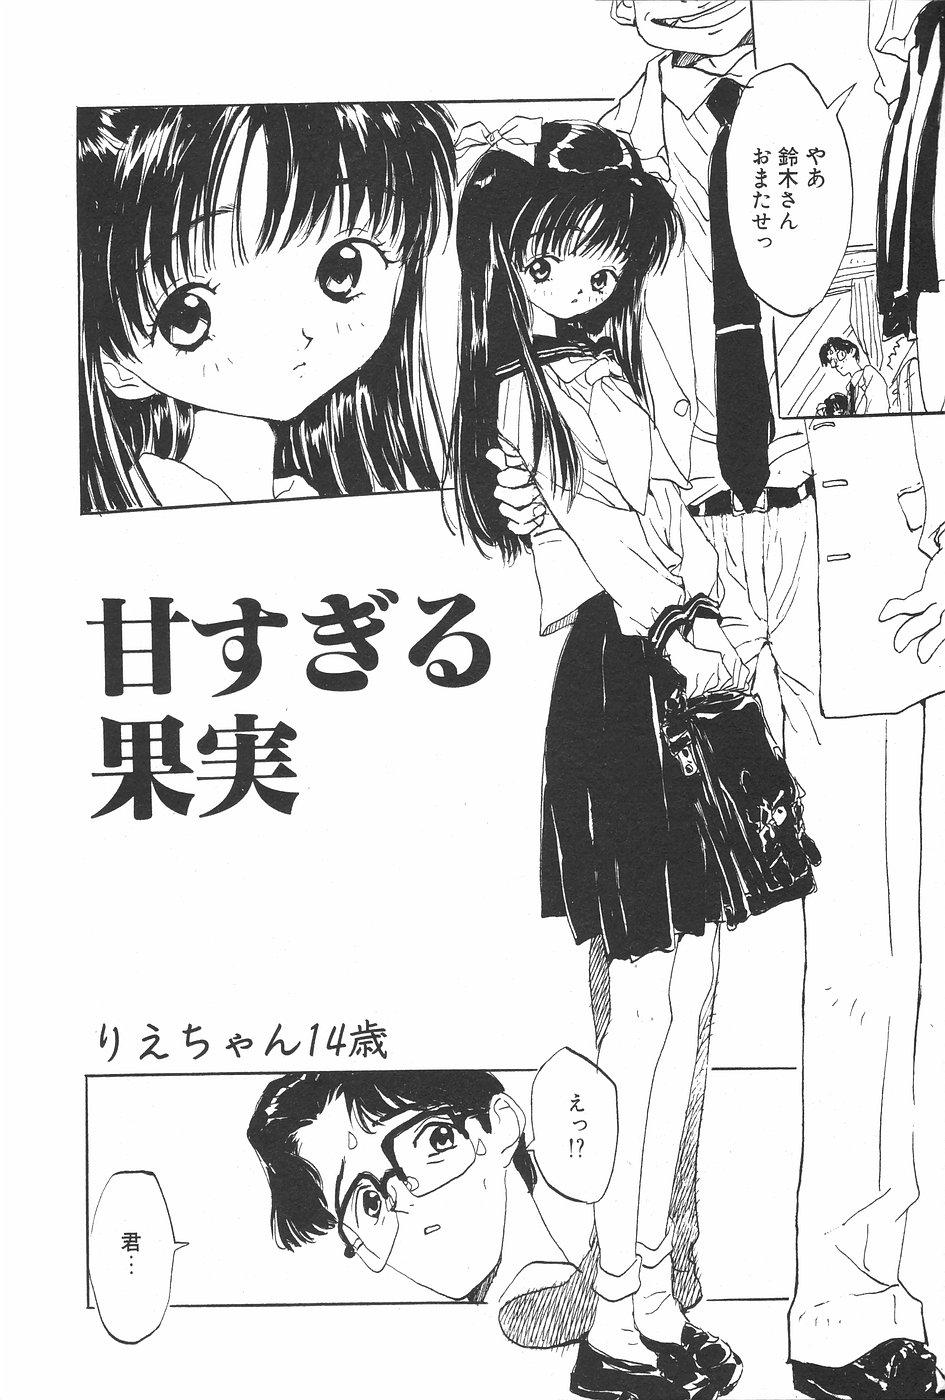 Manga Hotmilk 1997-07 37